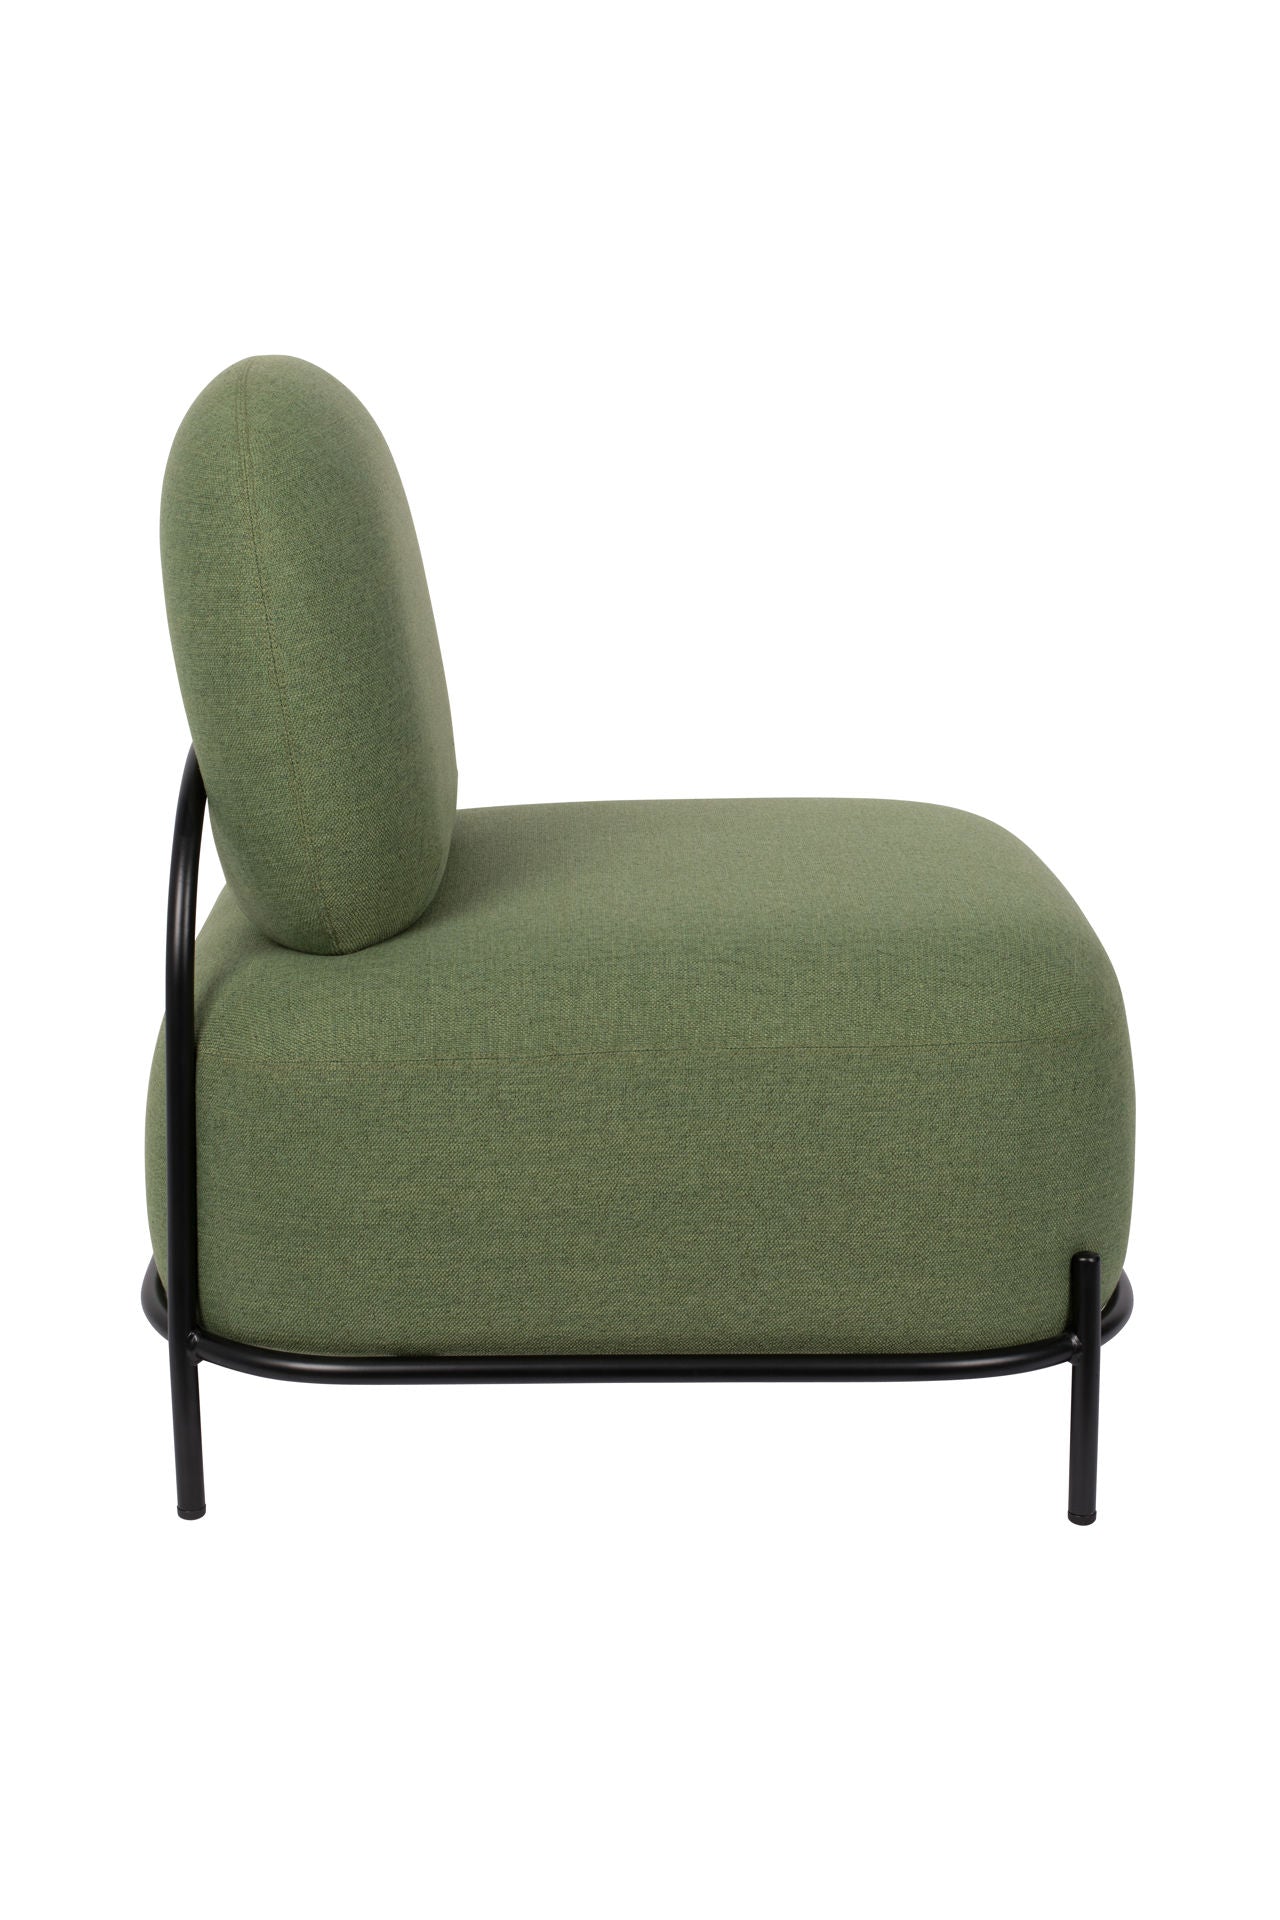 Nancy's Crestwood Lounge Chair - Modern - Green - Polyester, Plywood, Iron - 71.5 cm x 66 cm x 77 cm